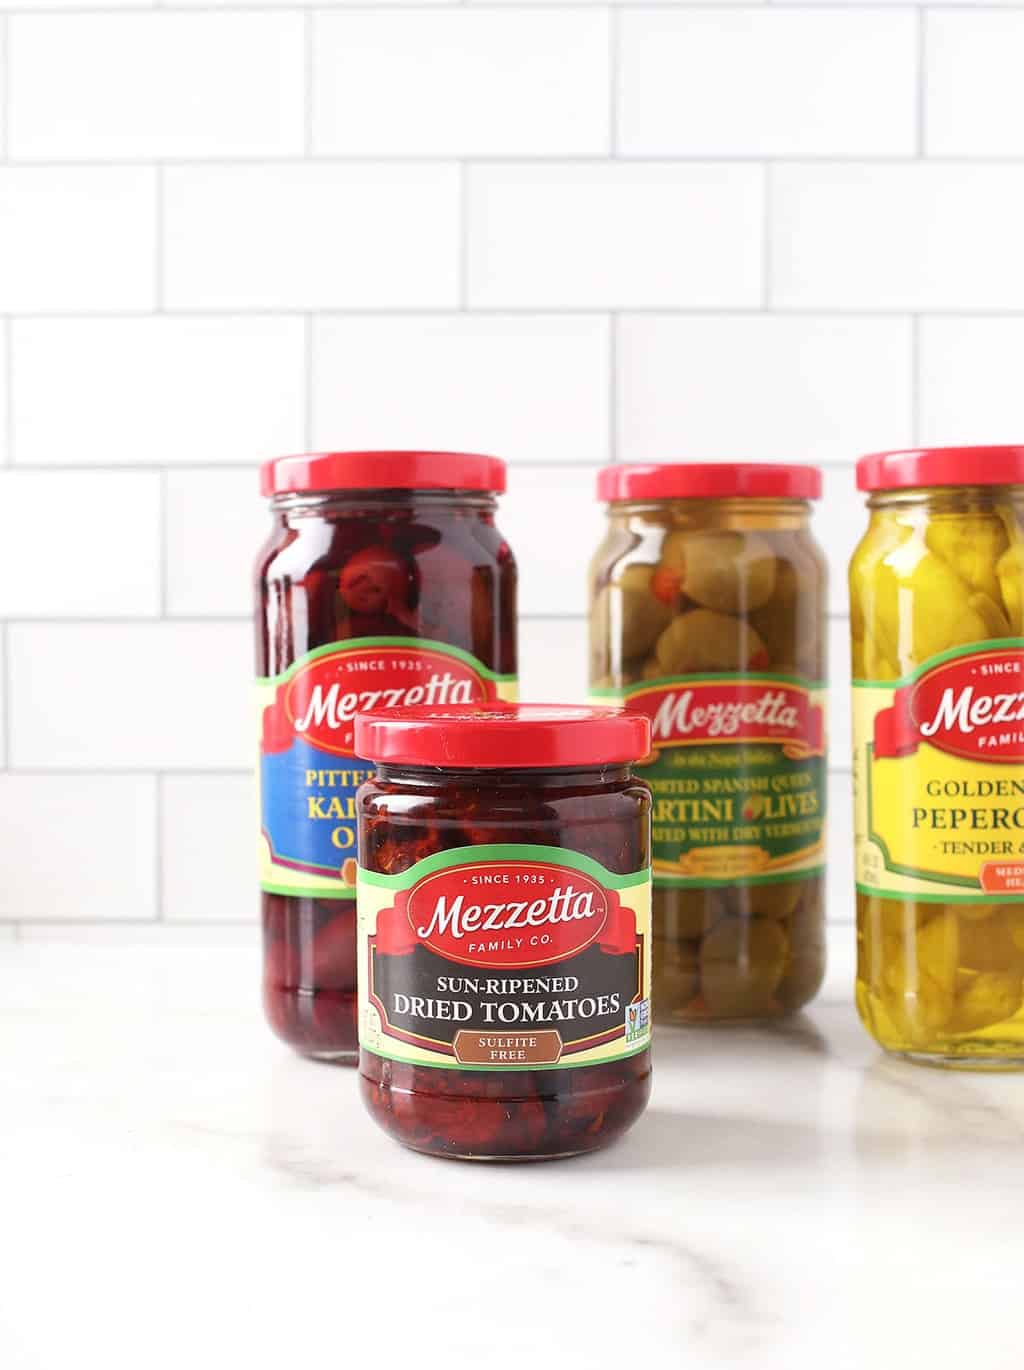 4 bottles of Mezzetta's olives and pickles